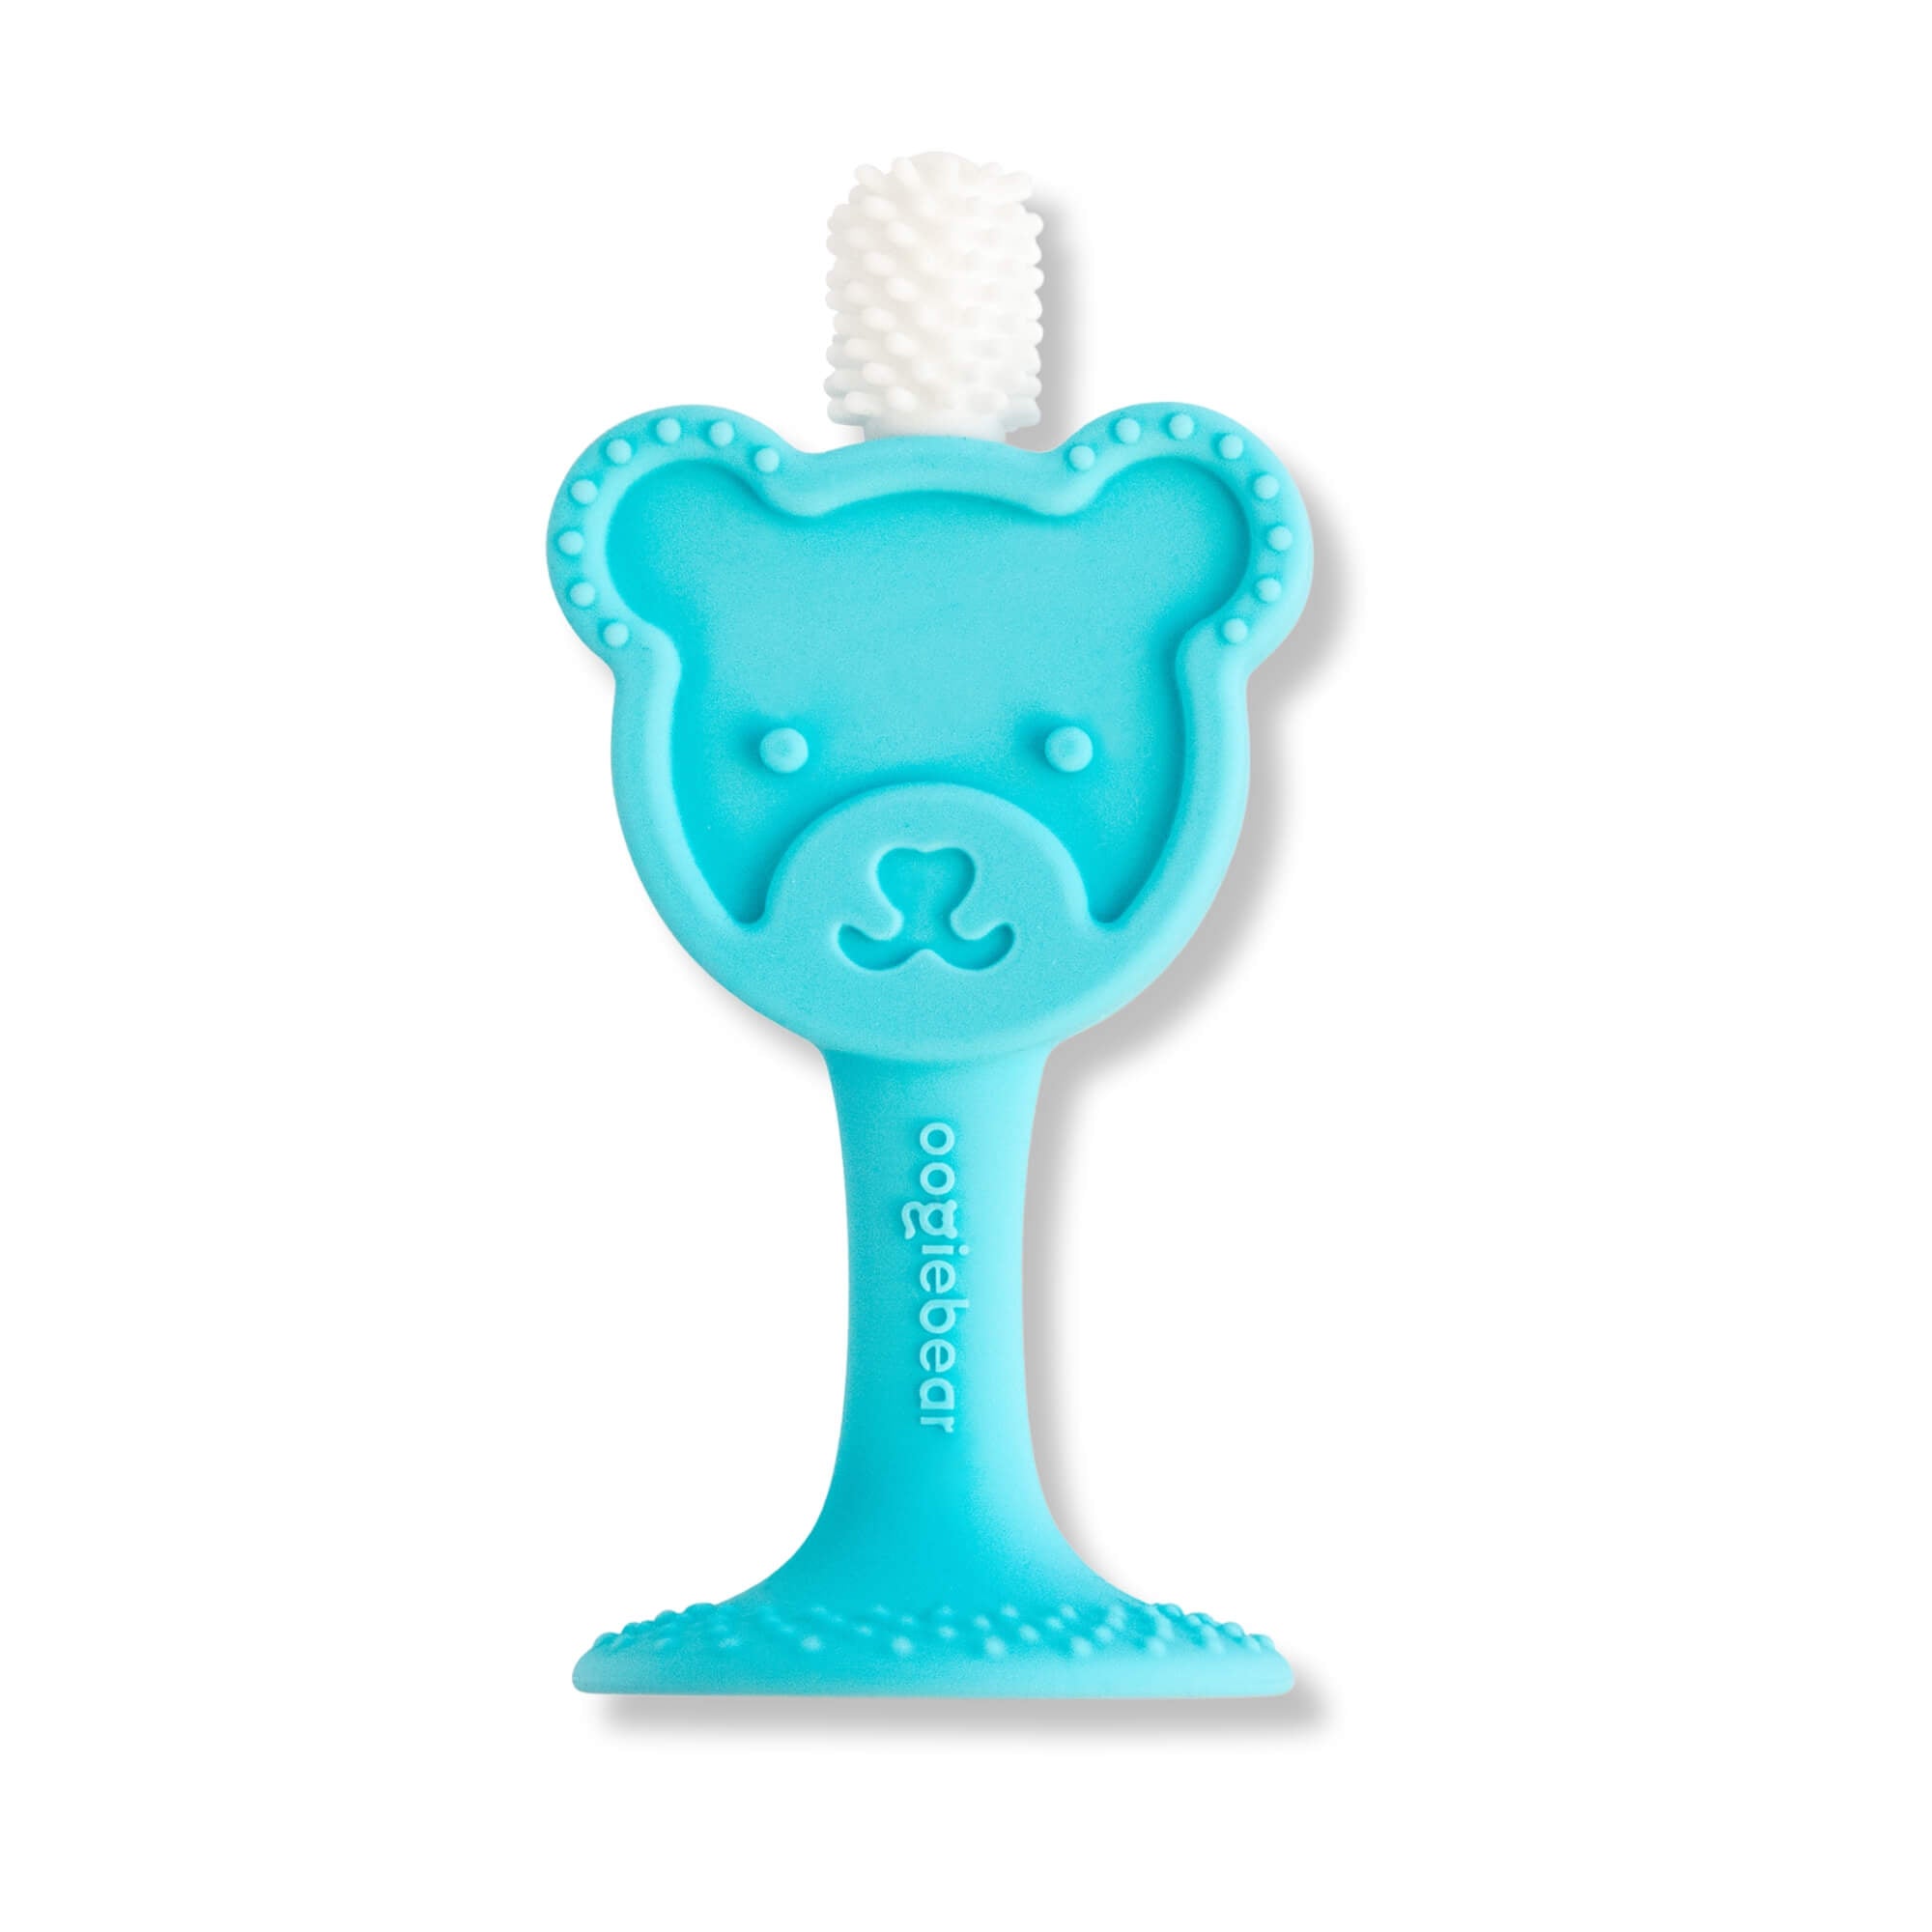 oogiebear 360° Toothbrush - Infant to Toddler Training Toothbrush